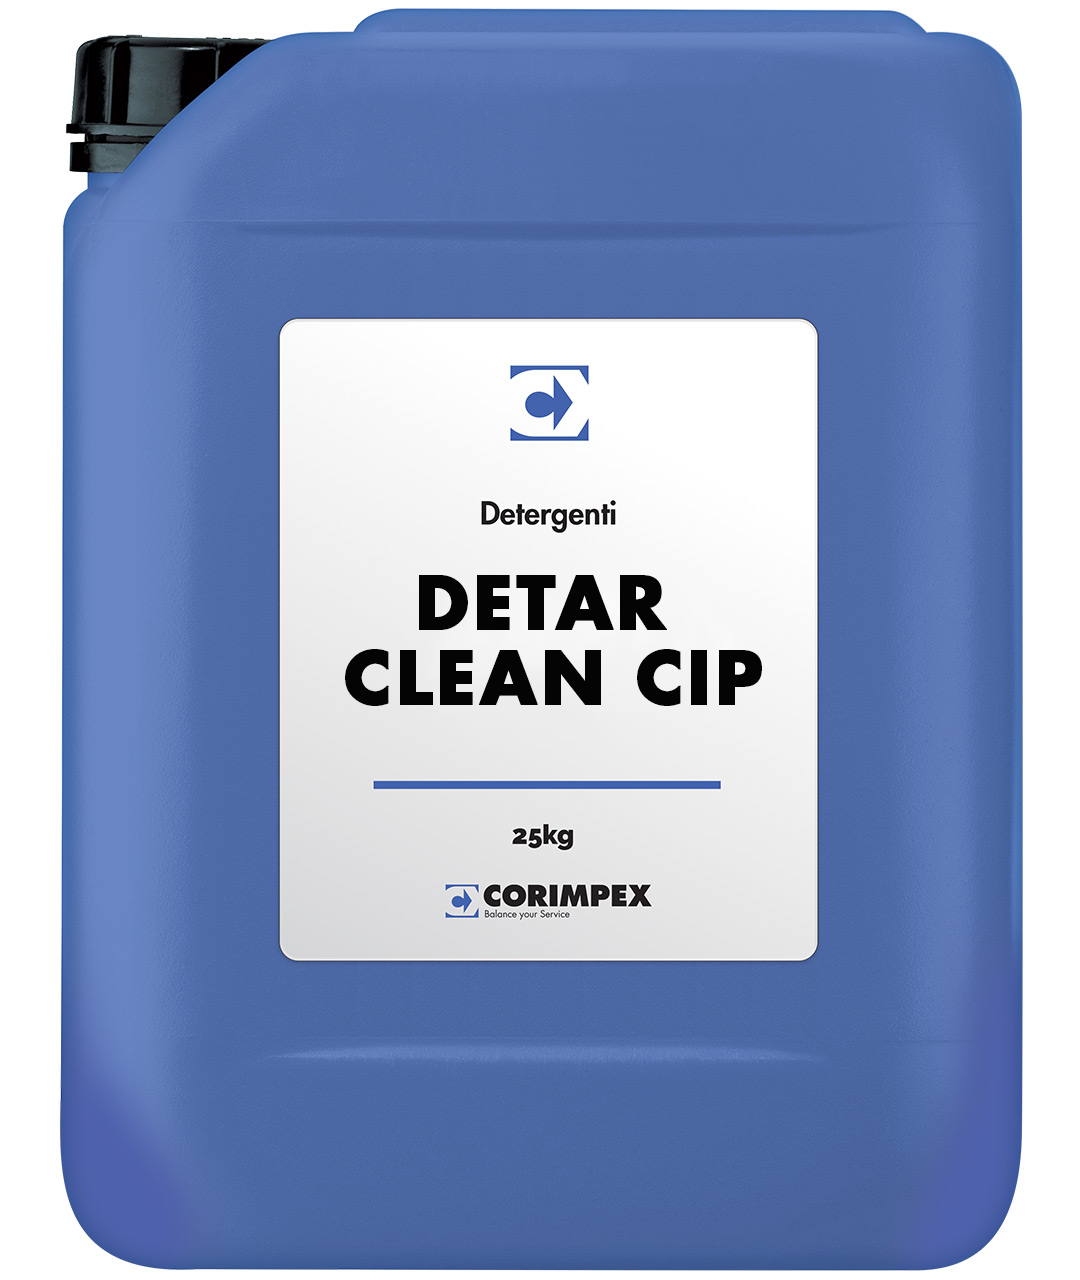 DETAR CLEAN CIP